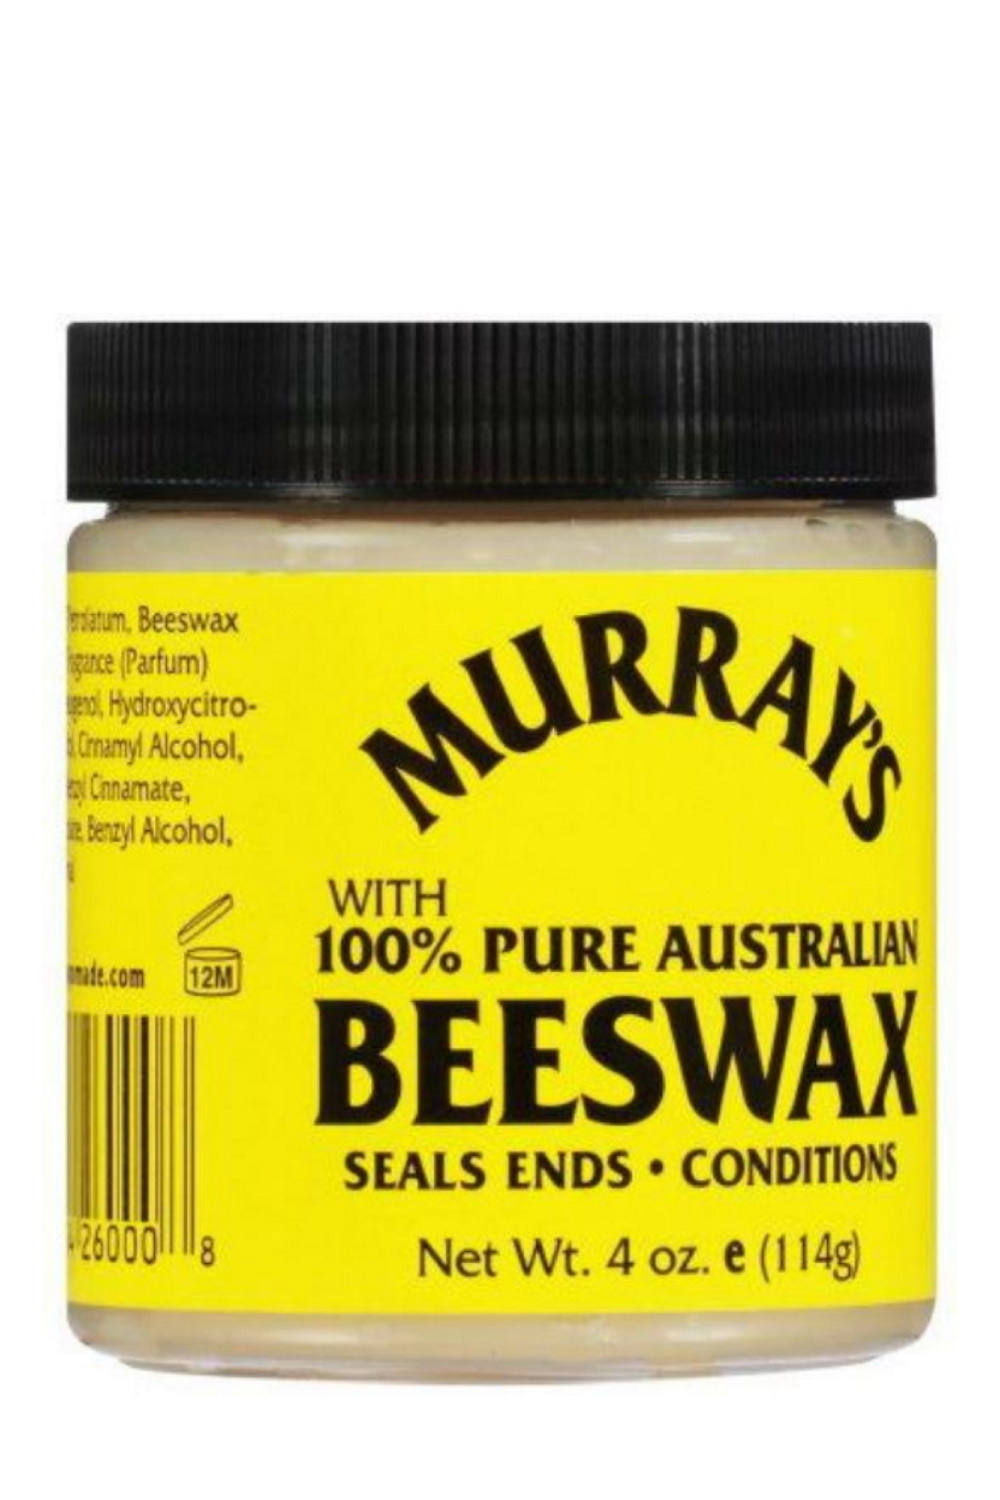 Murray's Black Beeswax, Black Beeswax, 114 G